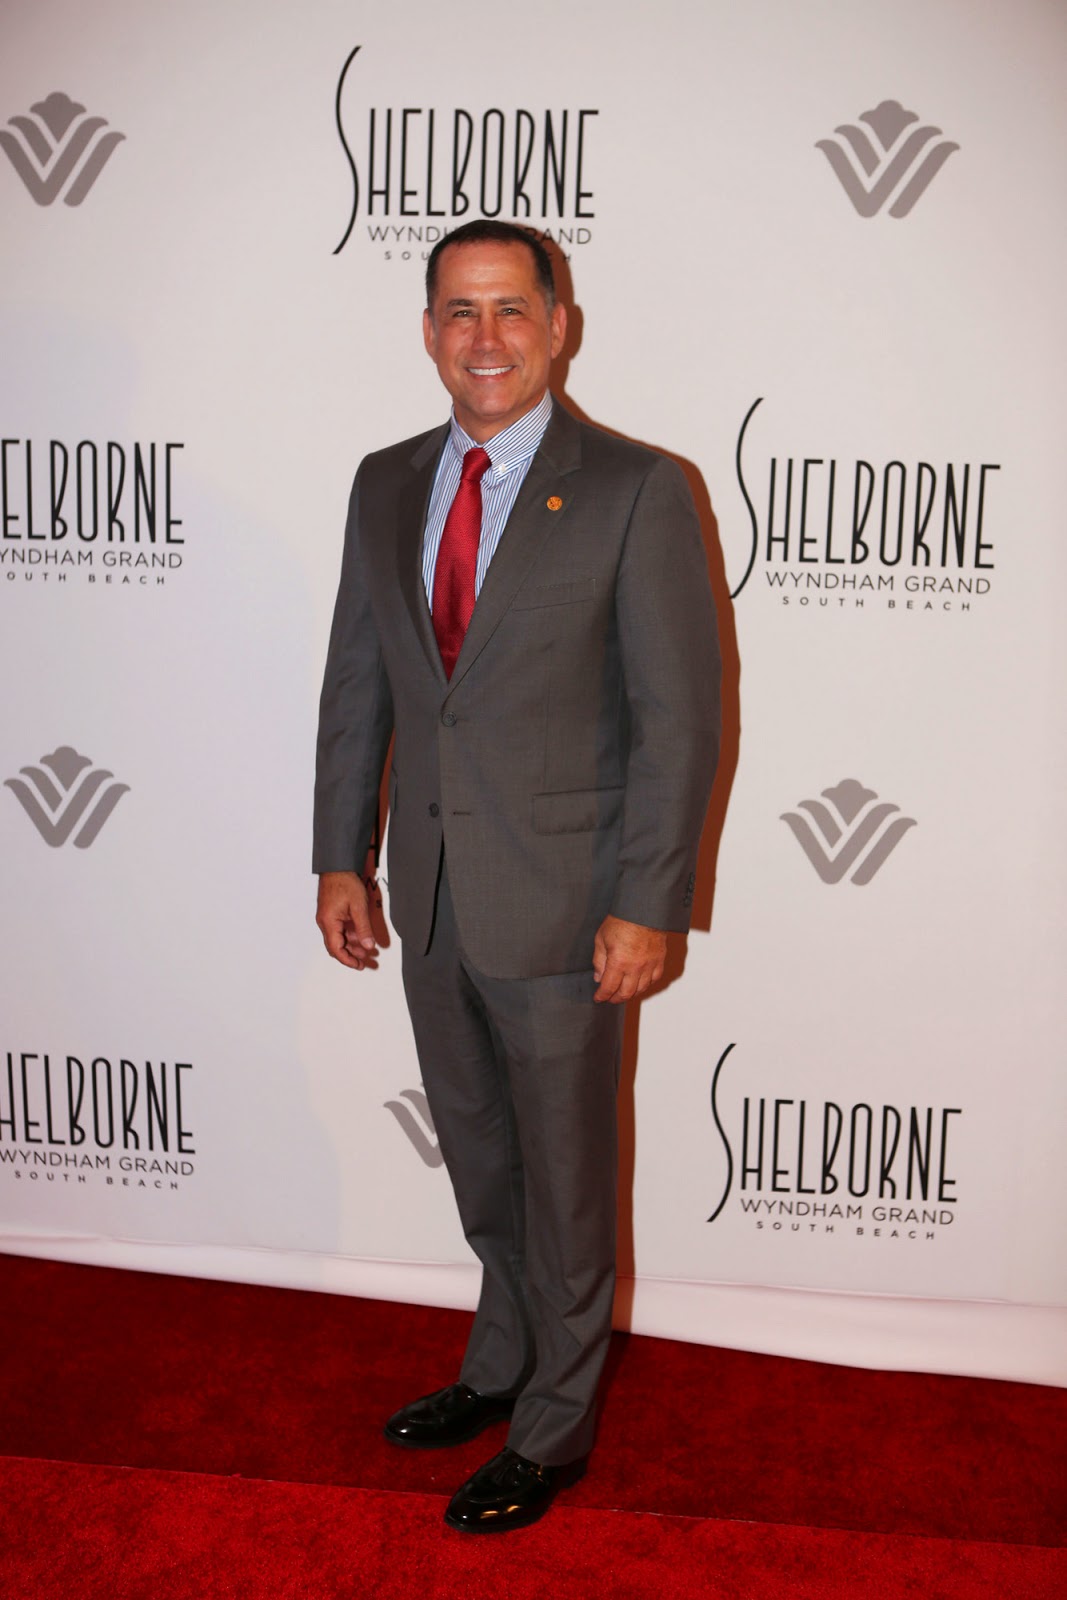 Shelborne Wyndham Grand South Beach Hosts Ribbon Cutting Ceremony and VIP Celebration